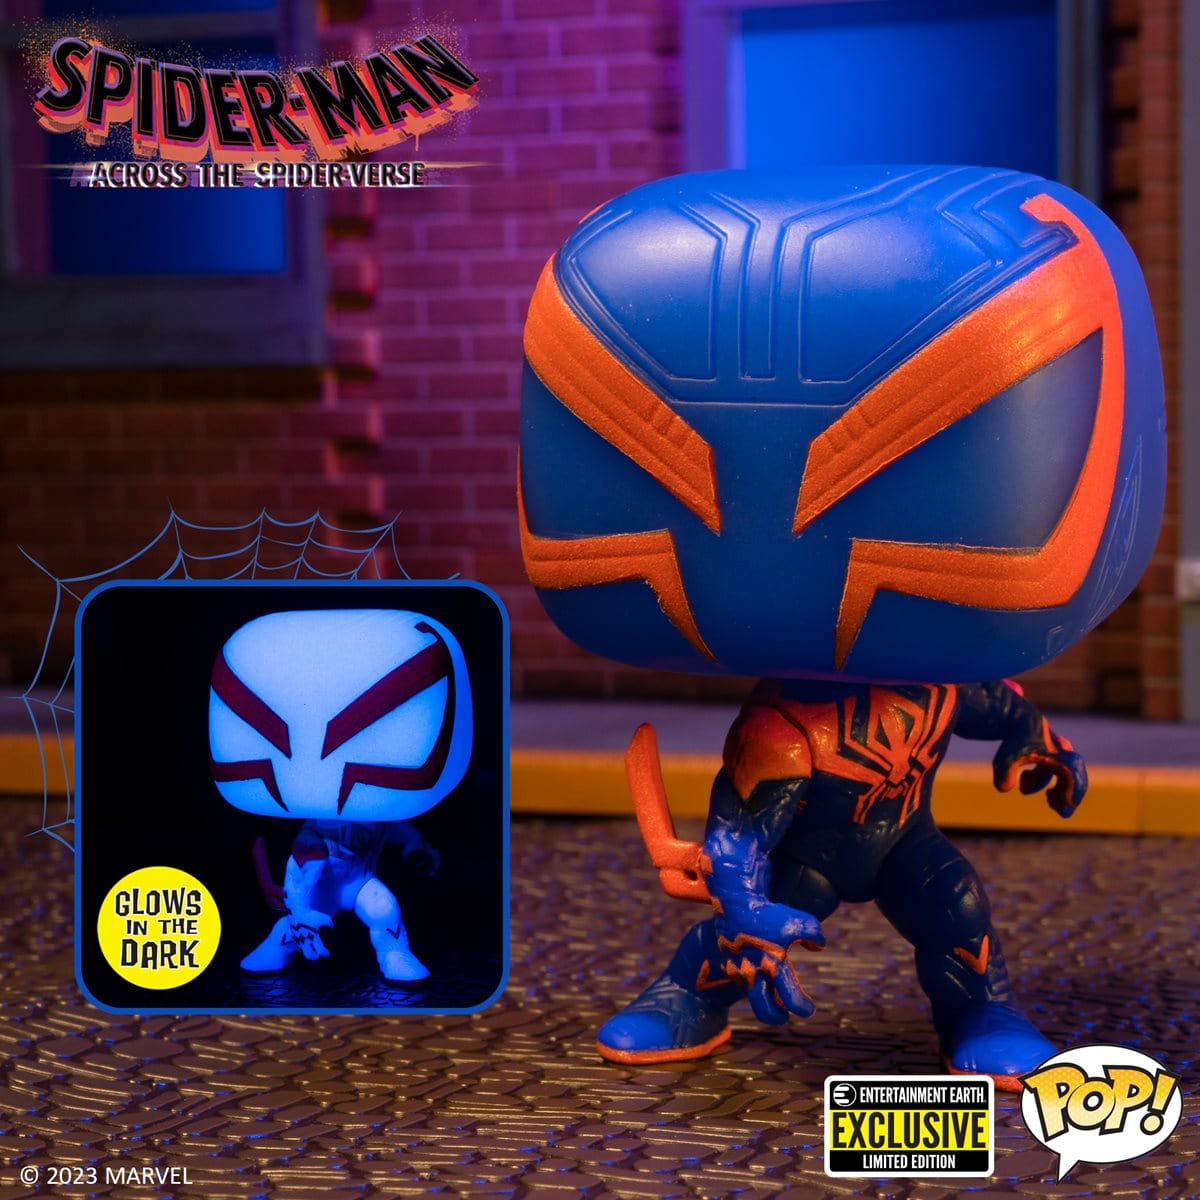 Spider-Man: Across the Spider-Verse Spider-Man 2099 Glow-in-the-Dark Pop! Vinyl Figure - Entertainment Earth Exclusive